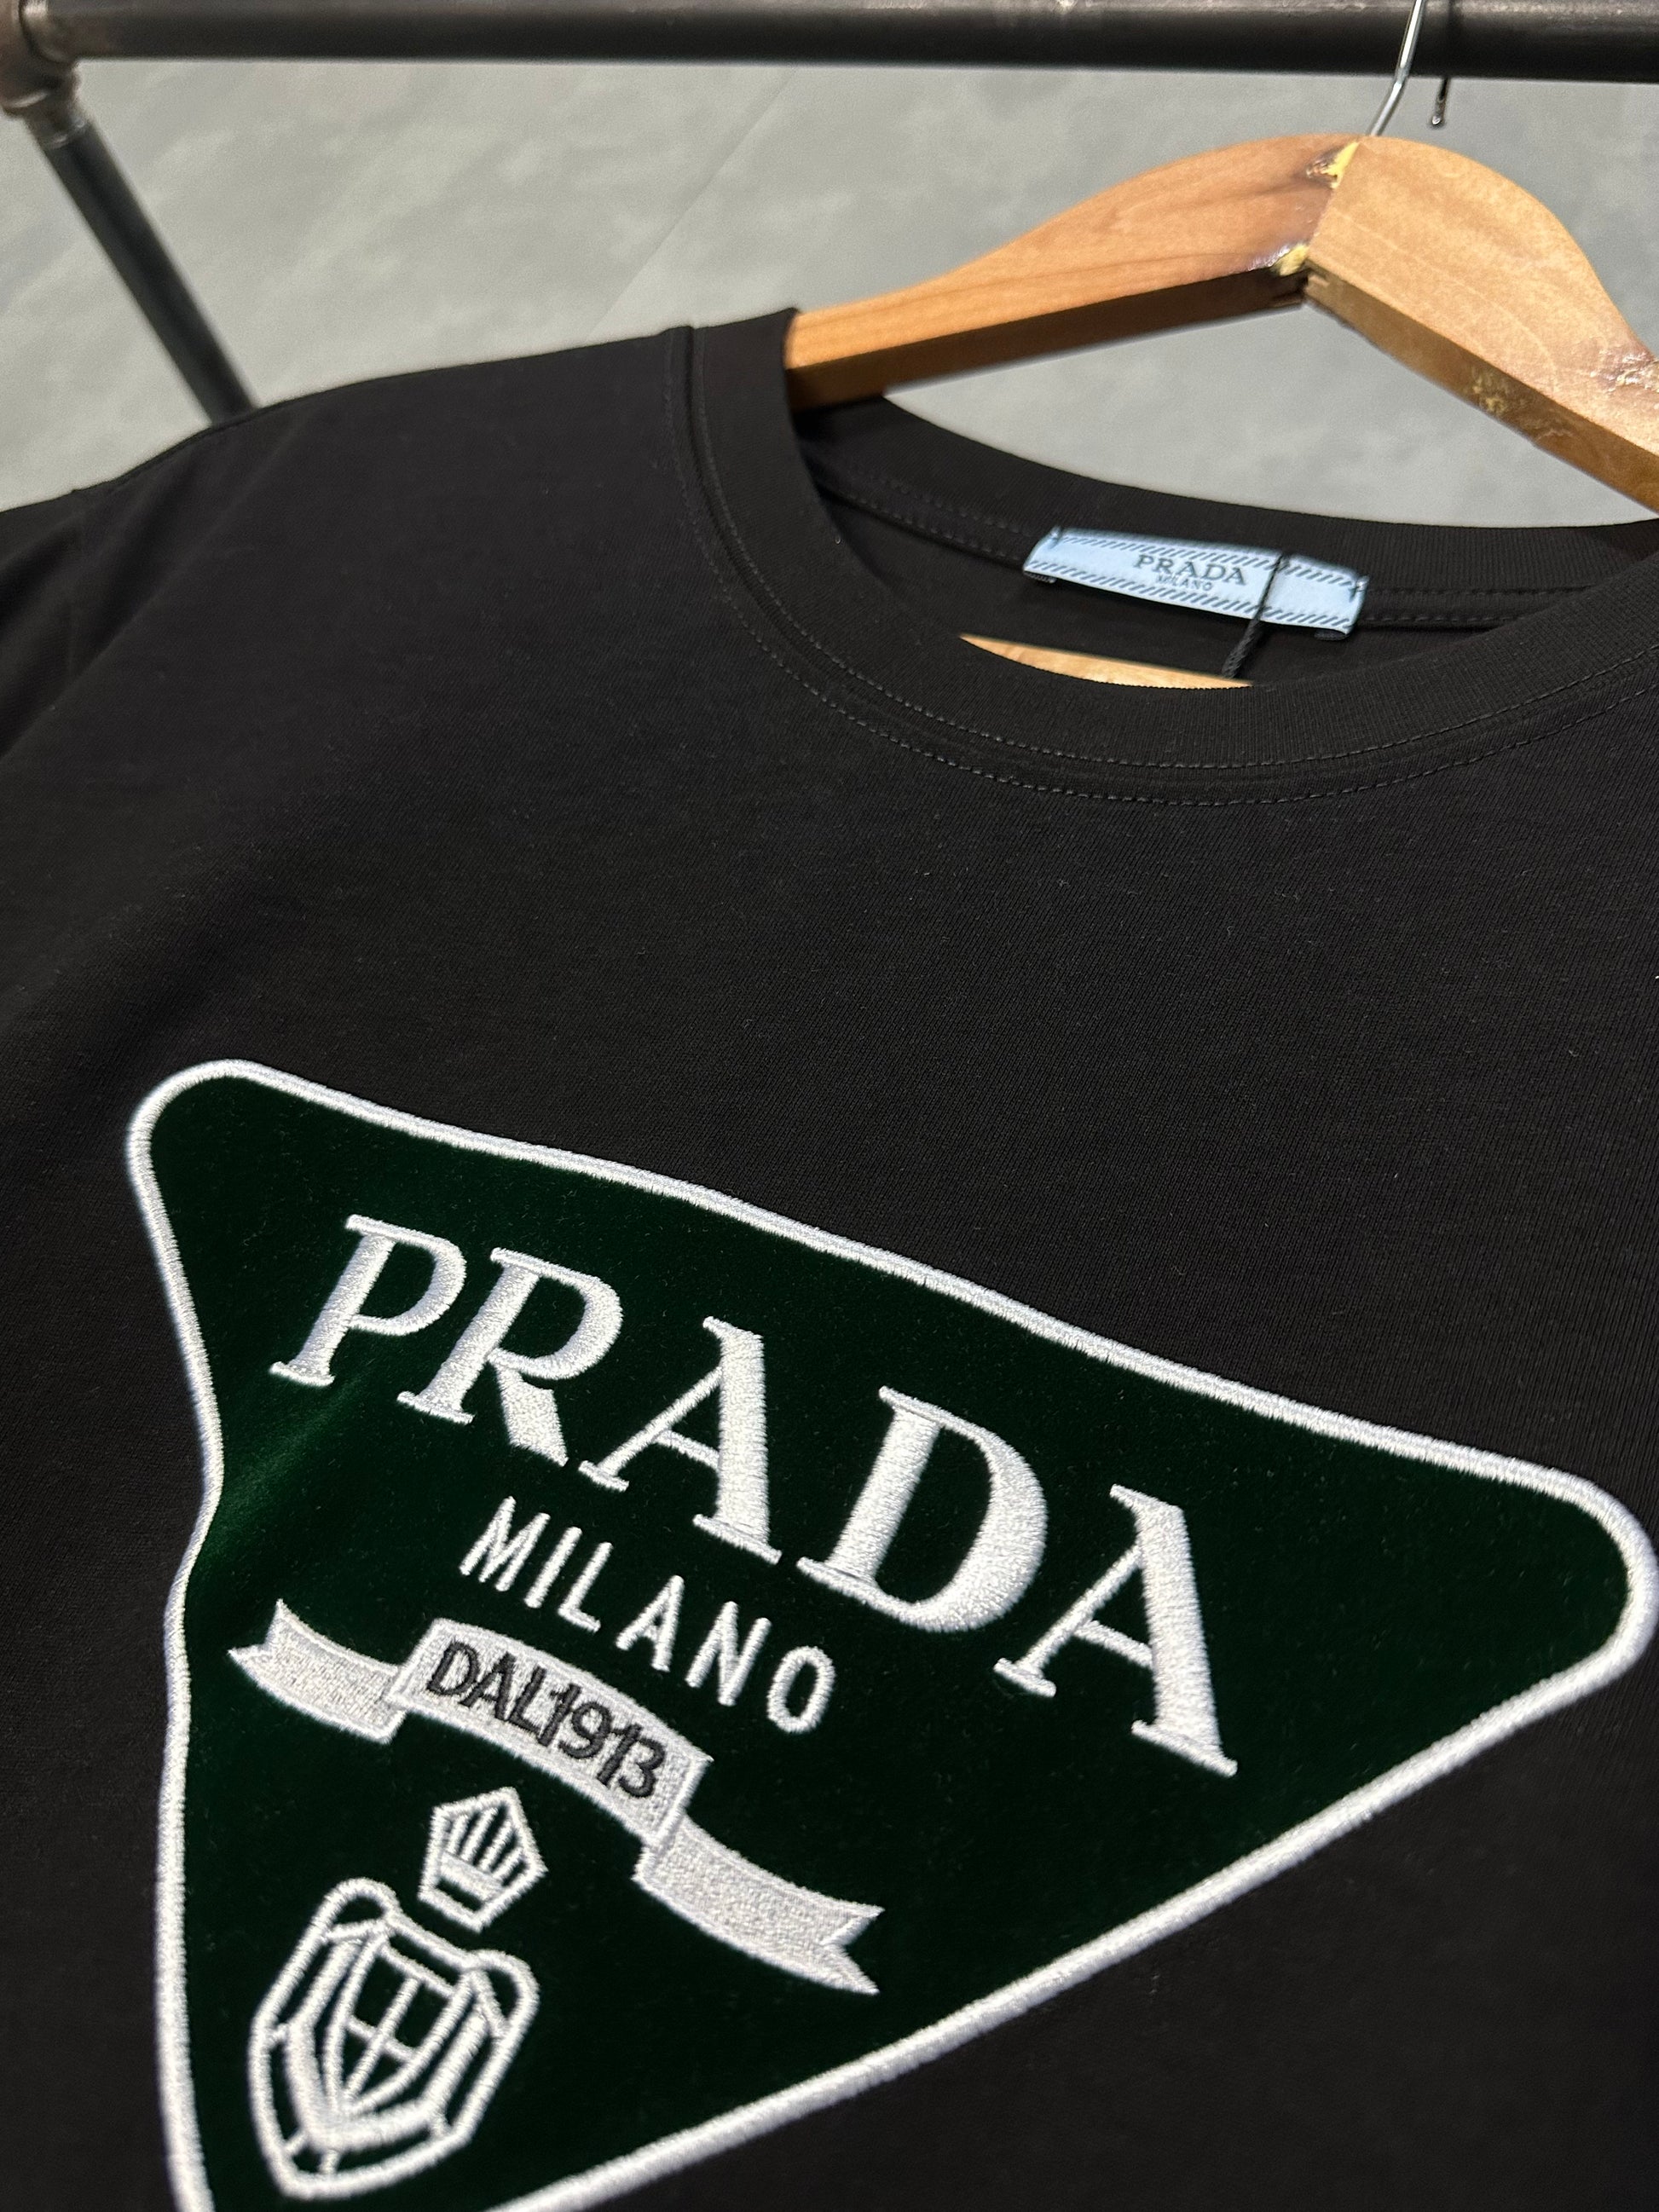 Prada Milano Dal 1913 shirt - T Shirt Classic